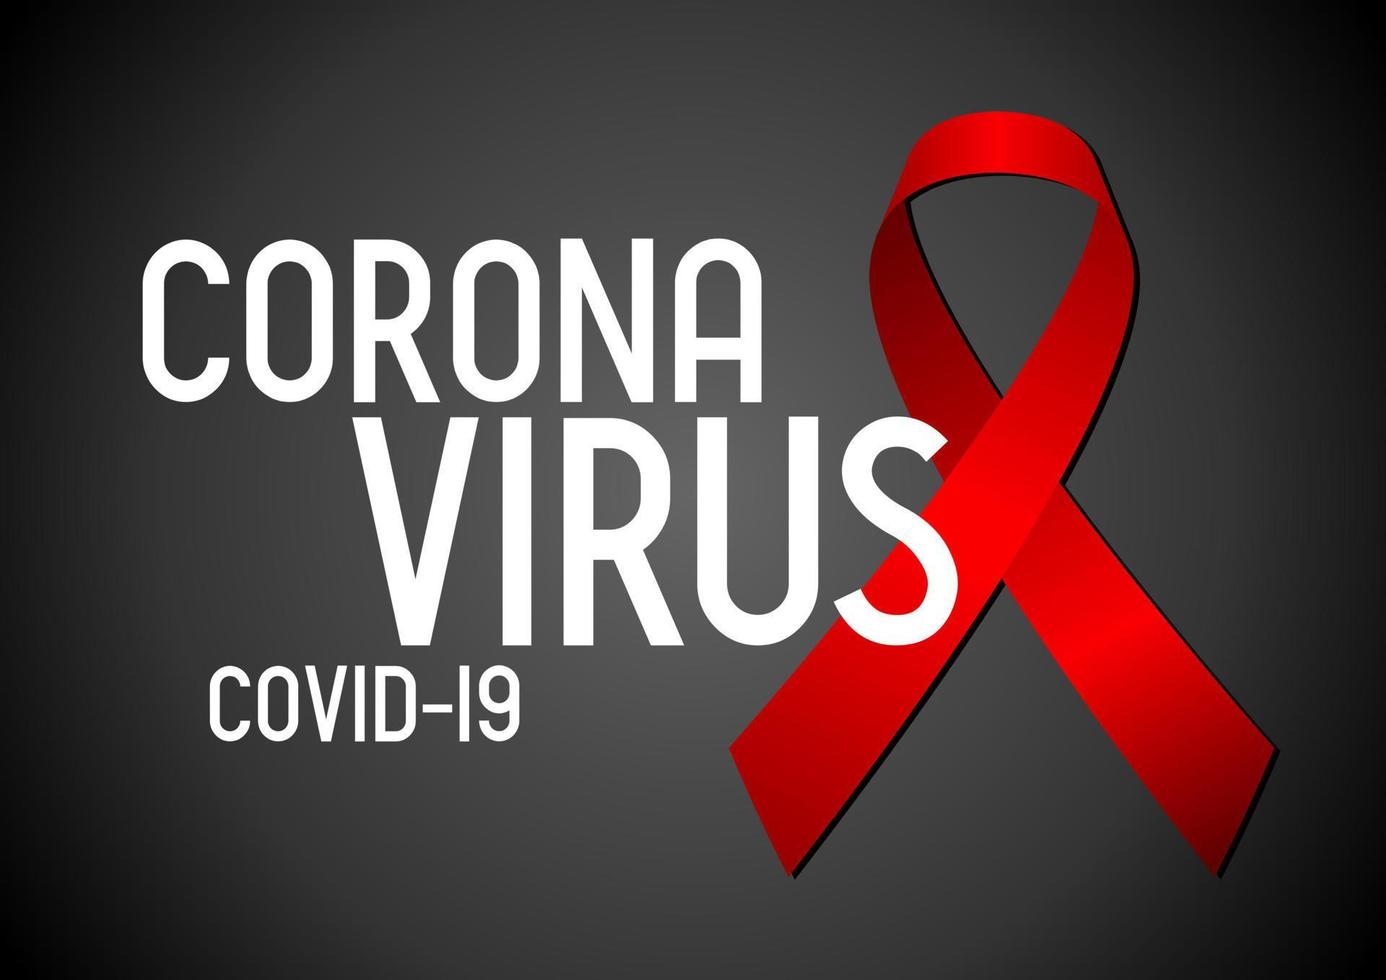 ruban rouge - concept de coronavirus vecteur